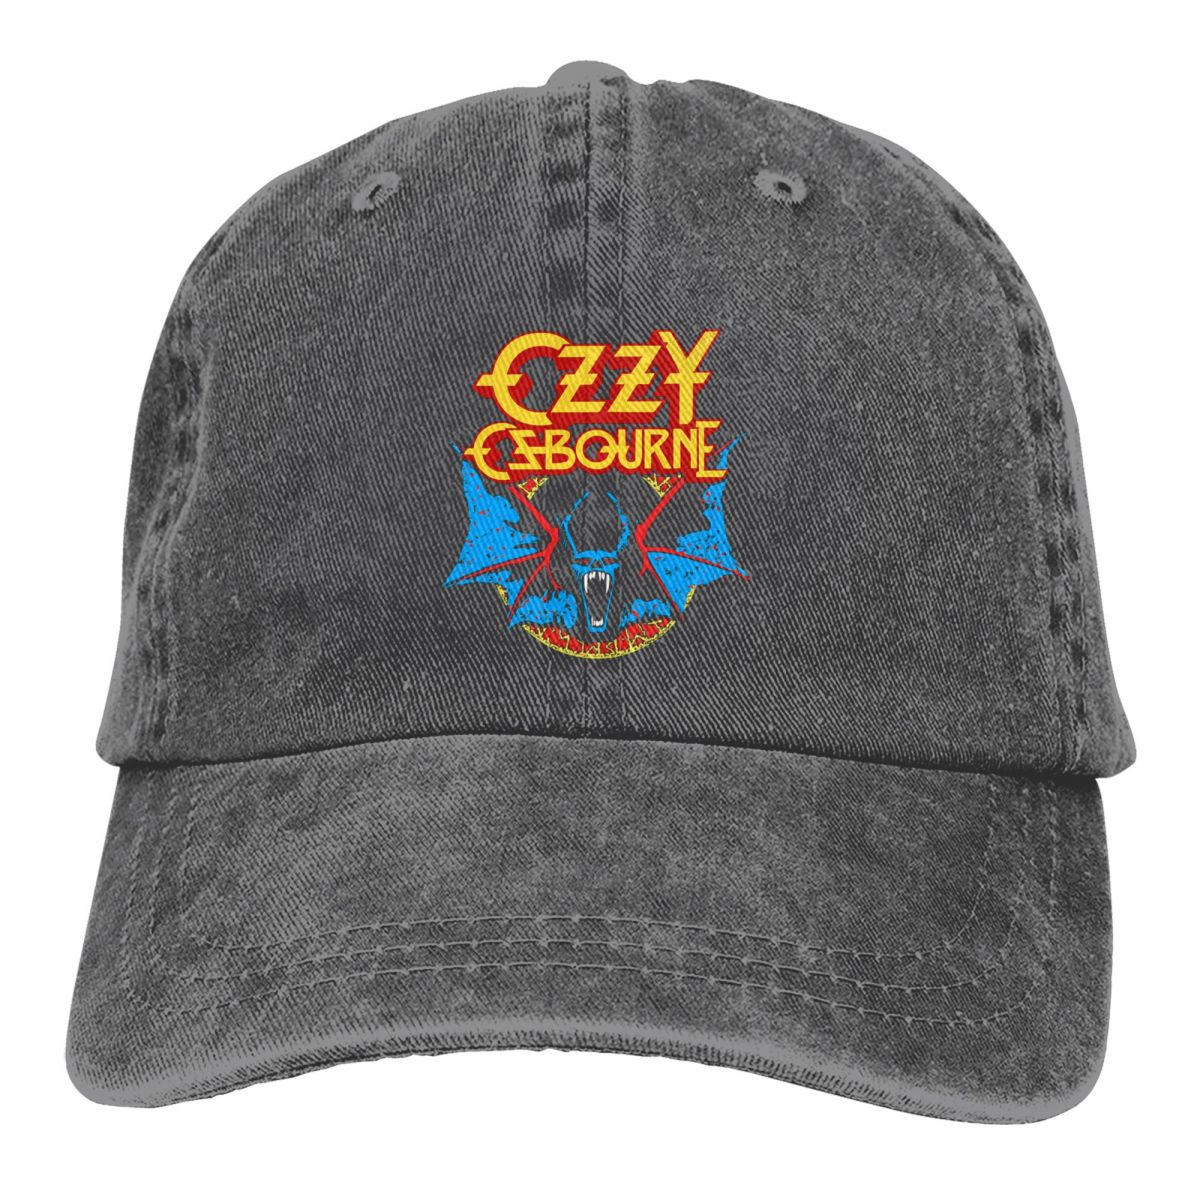 Ozzy Osbourne Rock Bat Prince Of Darkness - Snapback Baseball Cap - Summer Hat For Men and Women-Dark Gray-One Size-